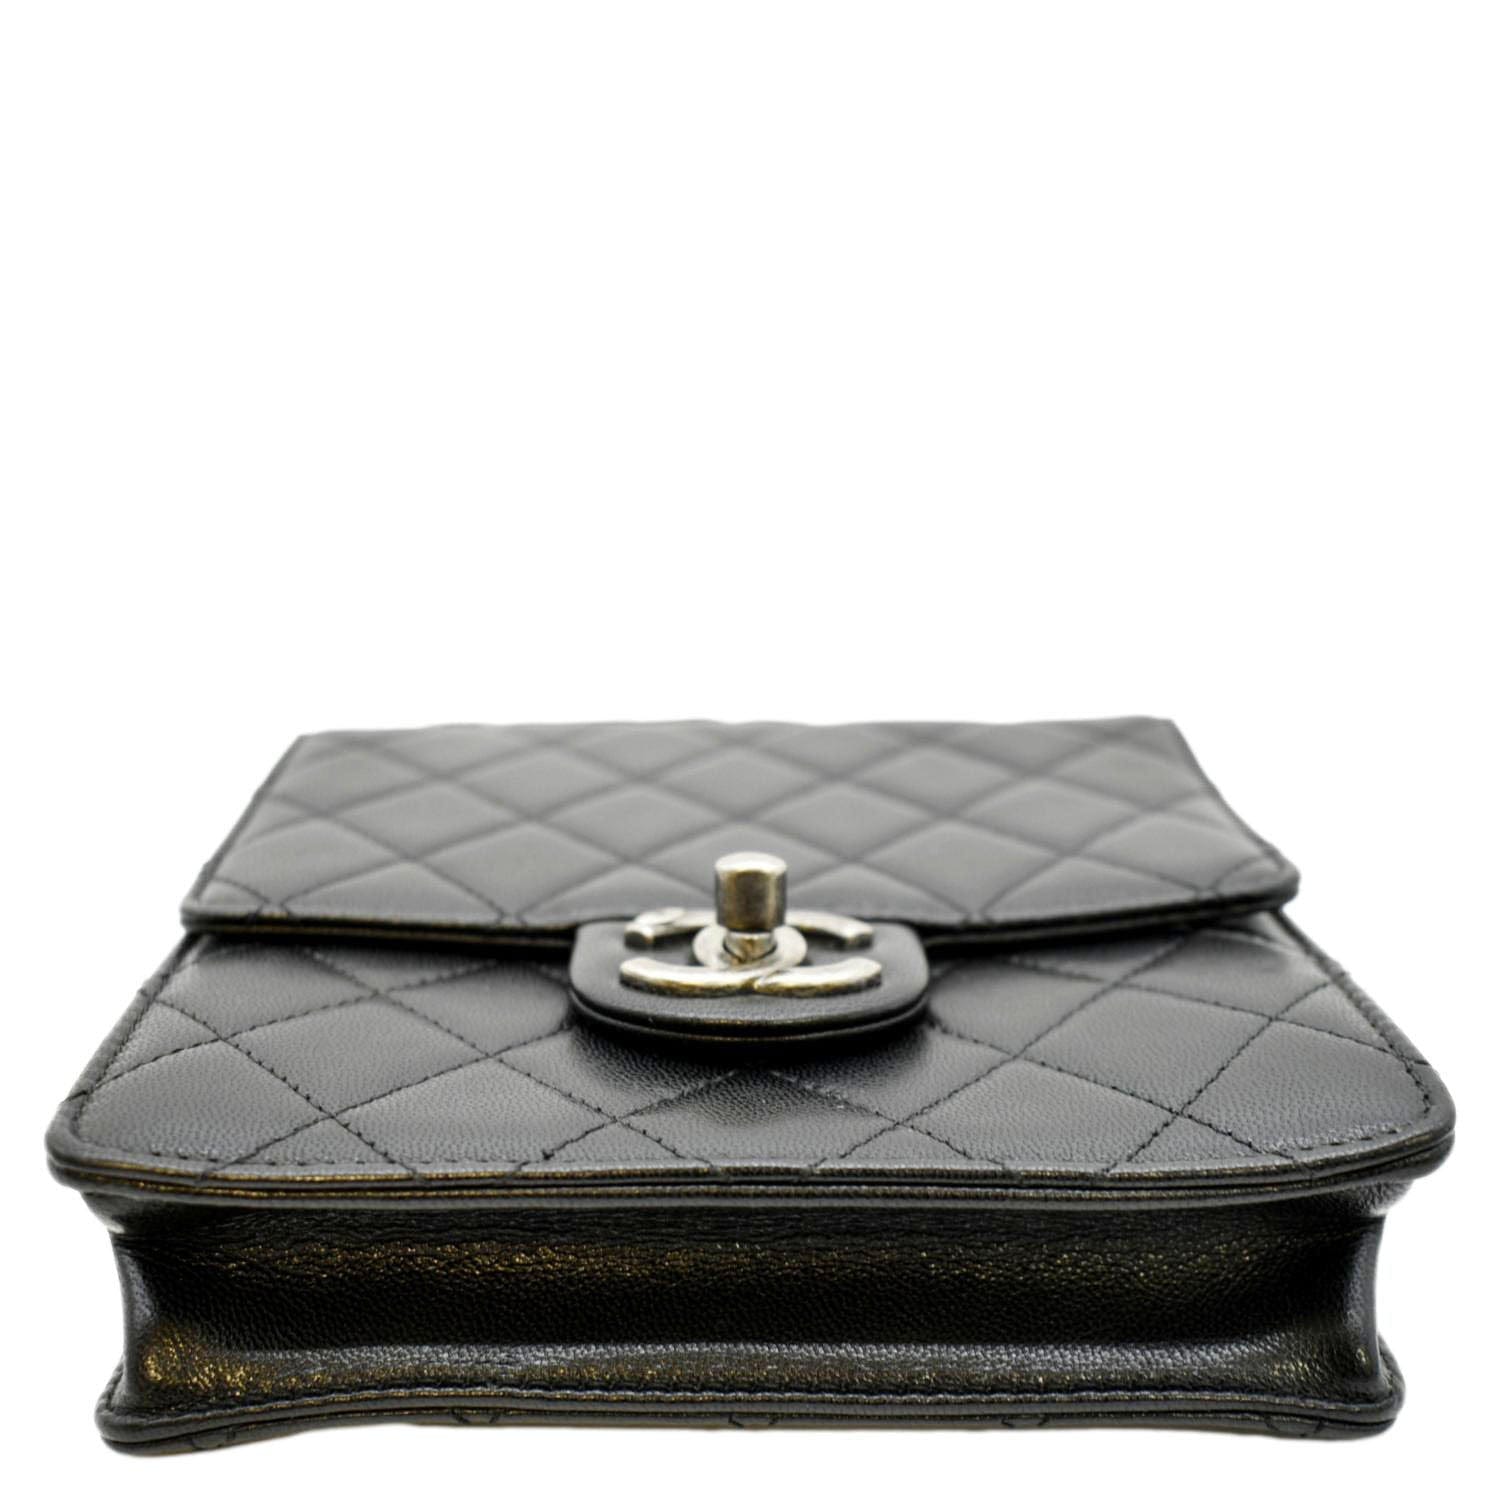 Chanel Black Leather Medium Chic Pearls Flap Bag Chanel